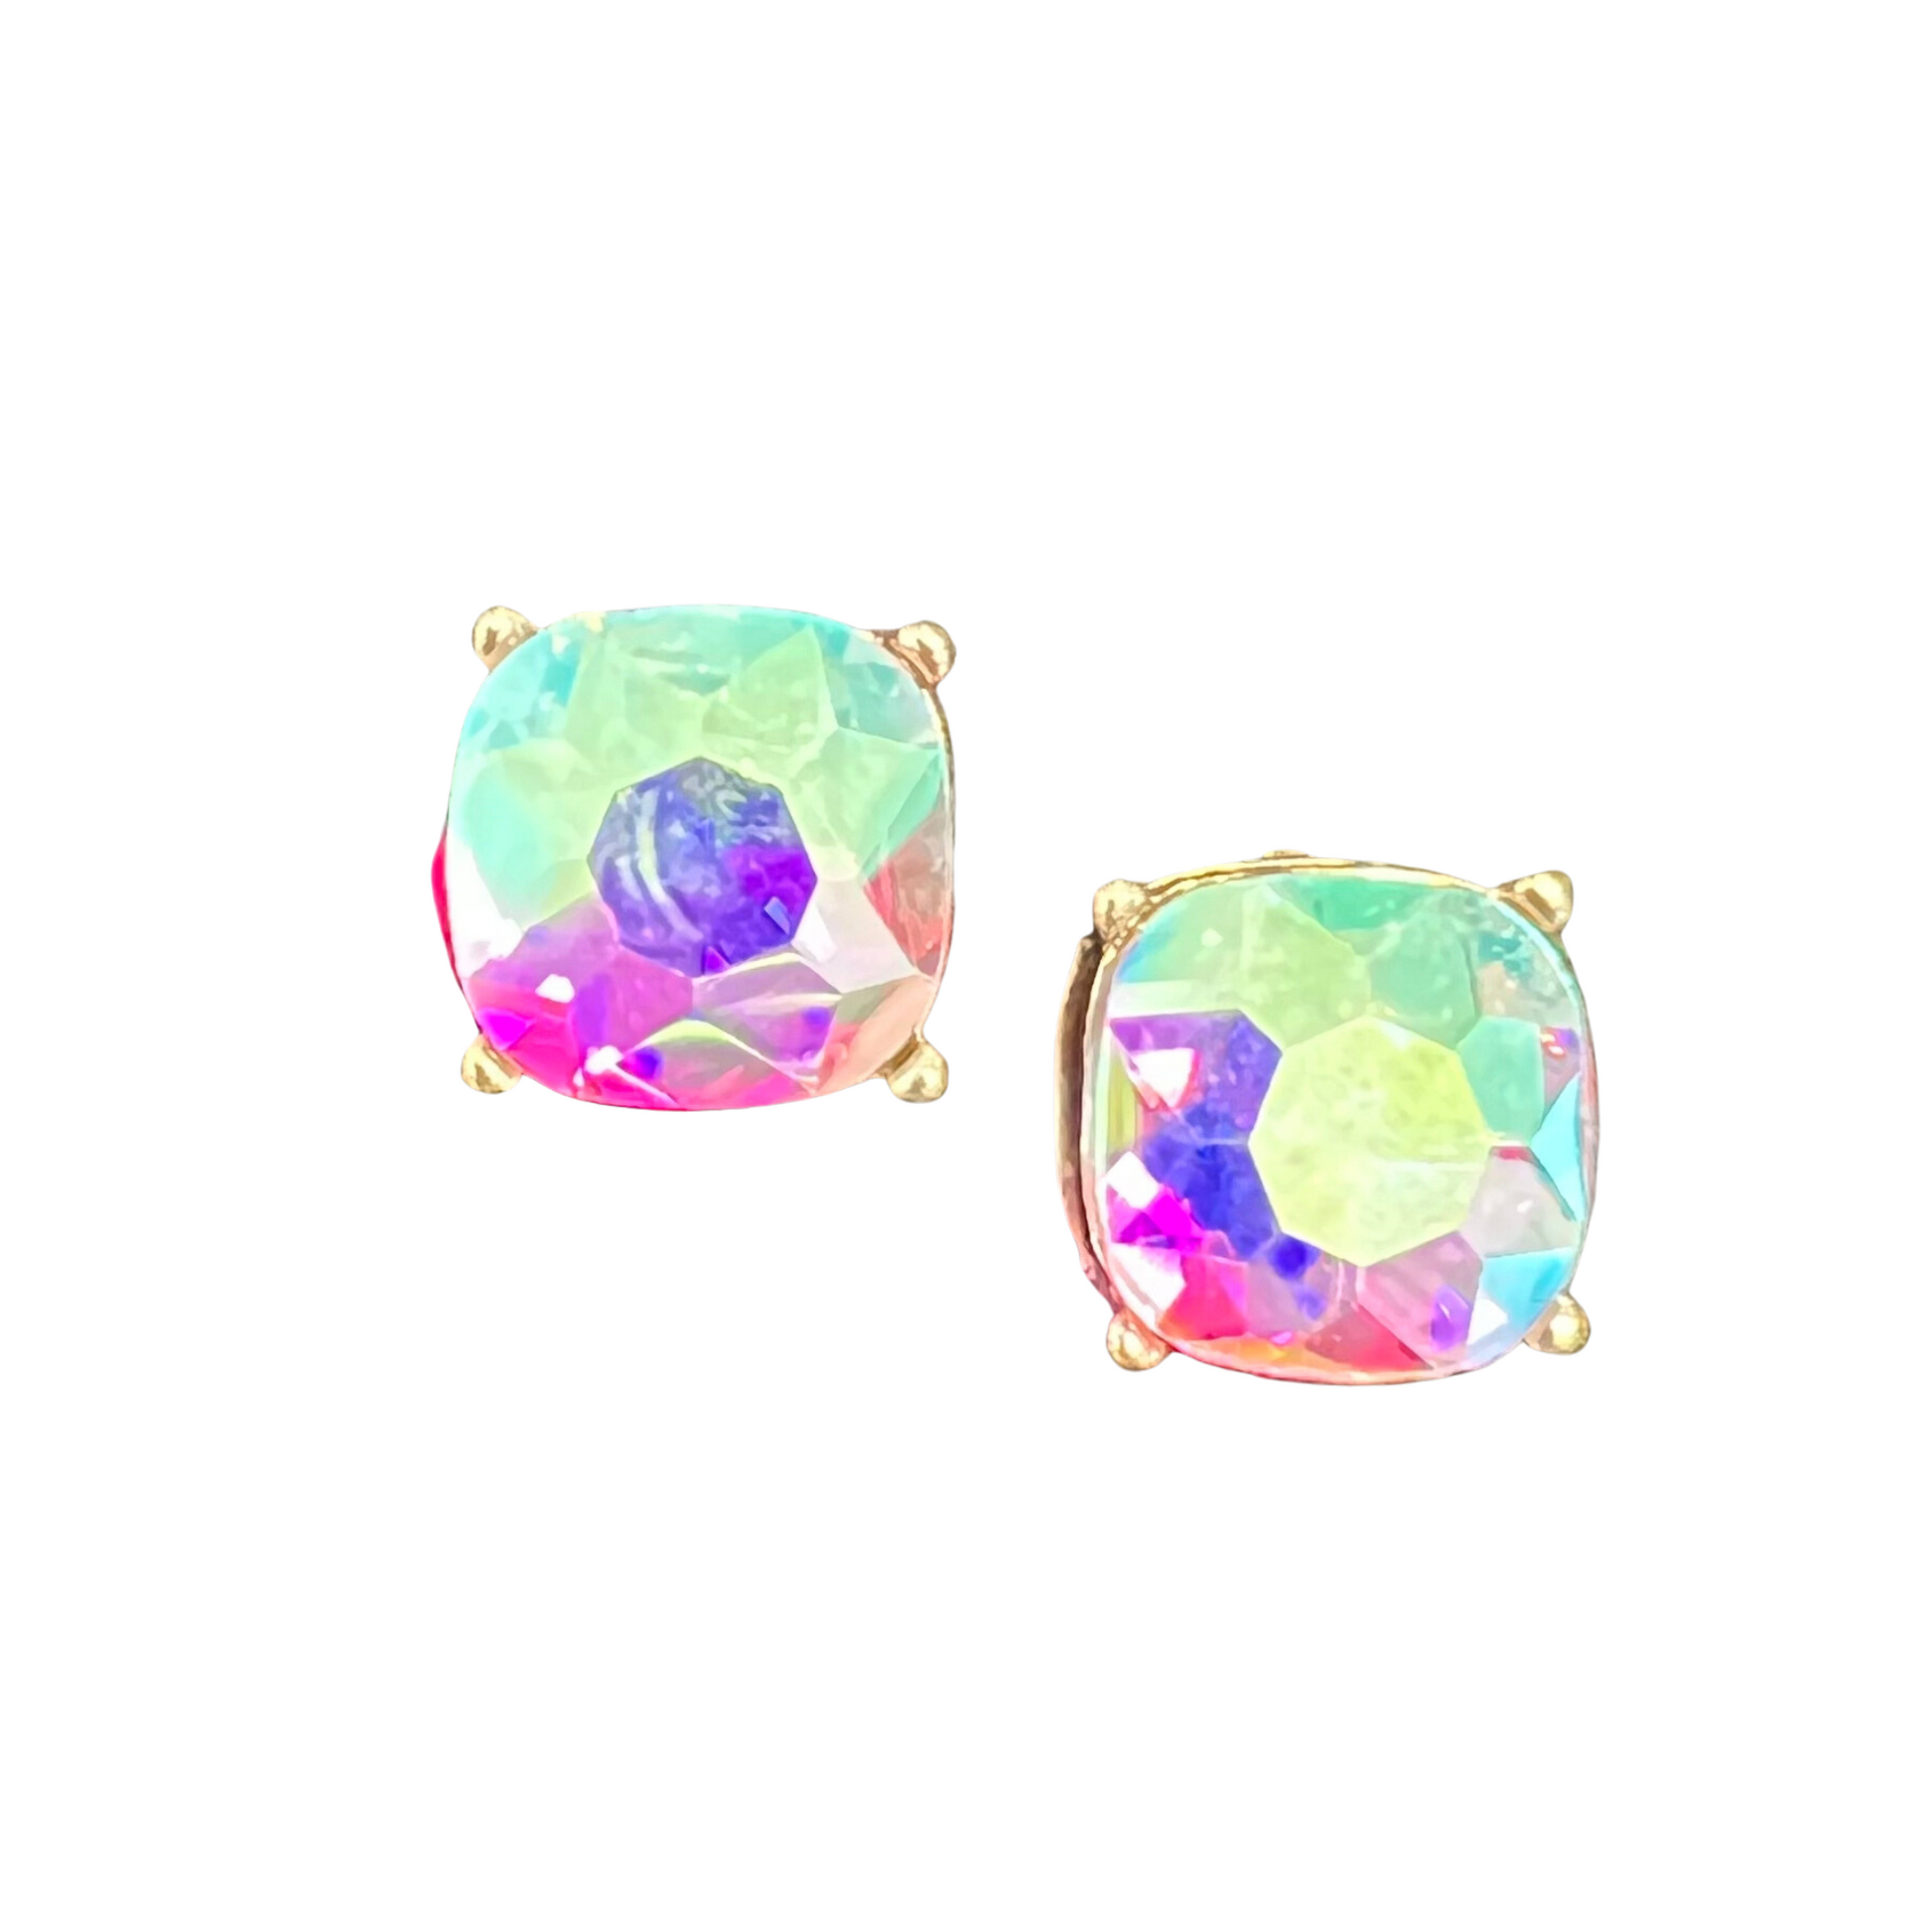 Large iridescent stone stud earrings